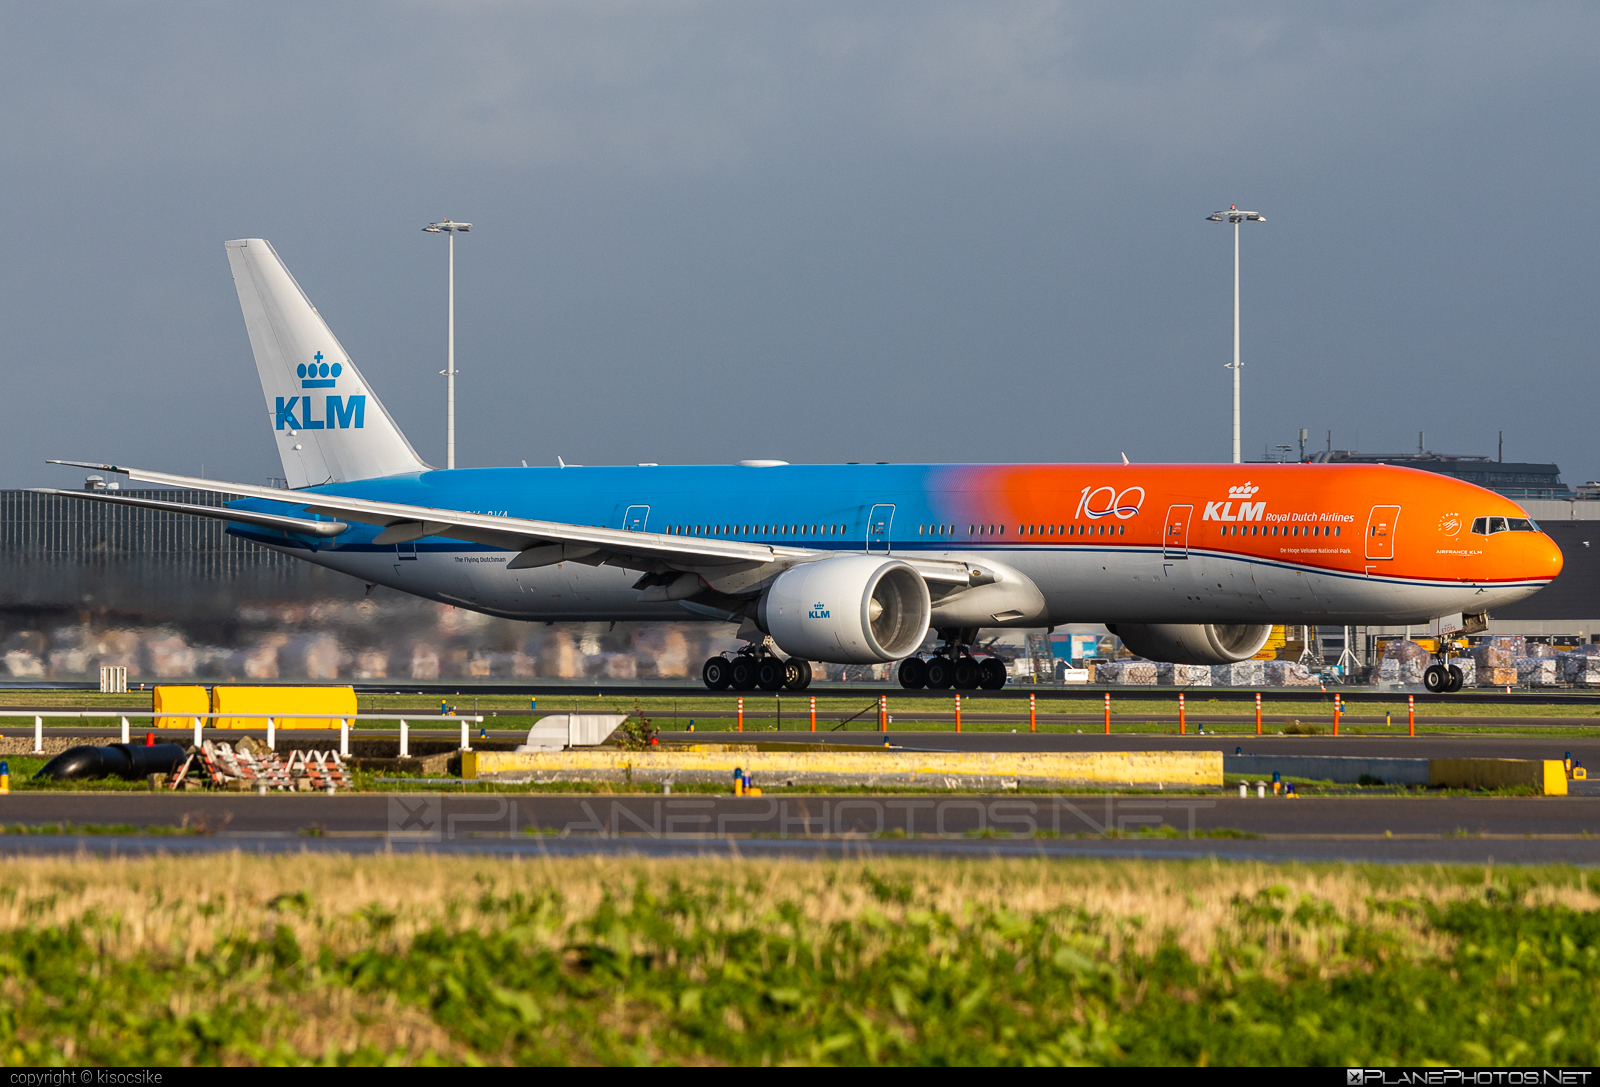 Boeing 777-300ER - PH-BVA operated by KLM Royal Dutch Airlines #b777 #b777er #boeing #boeing777 #klm #klmroyaldutchairlines #royaldutchairlines #tripleseven